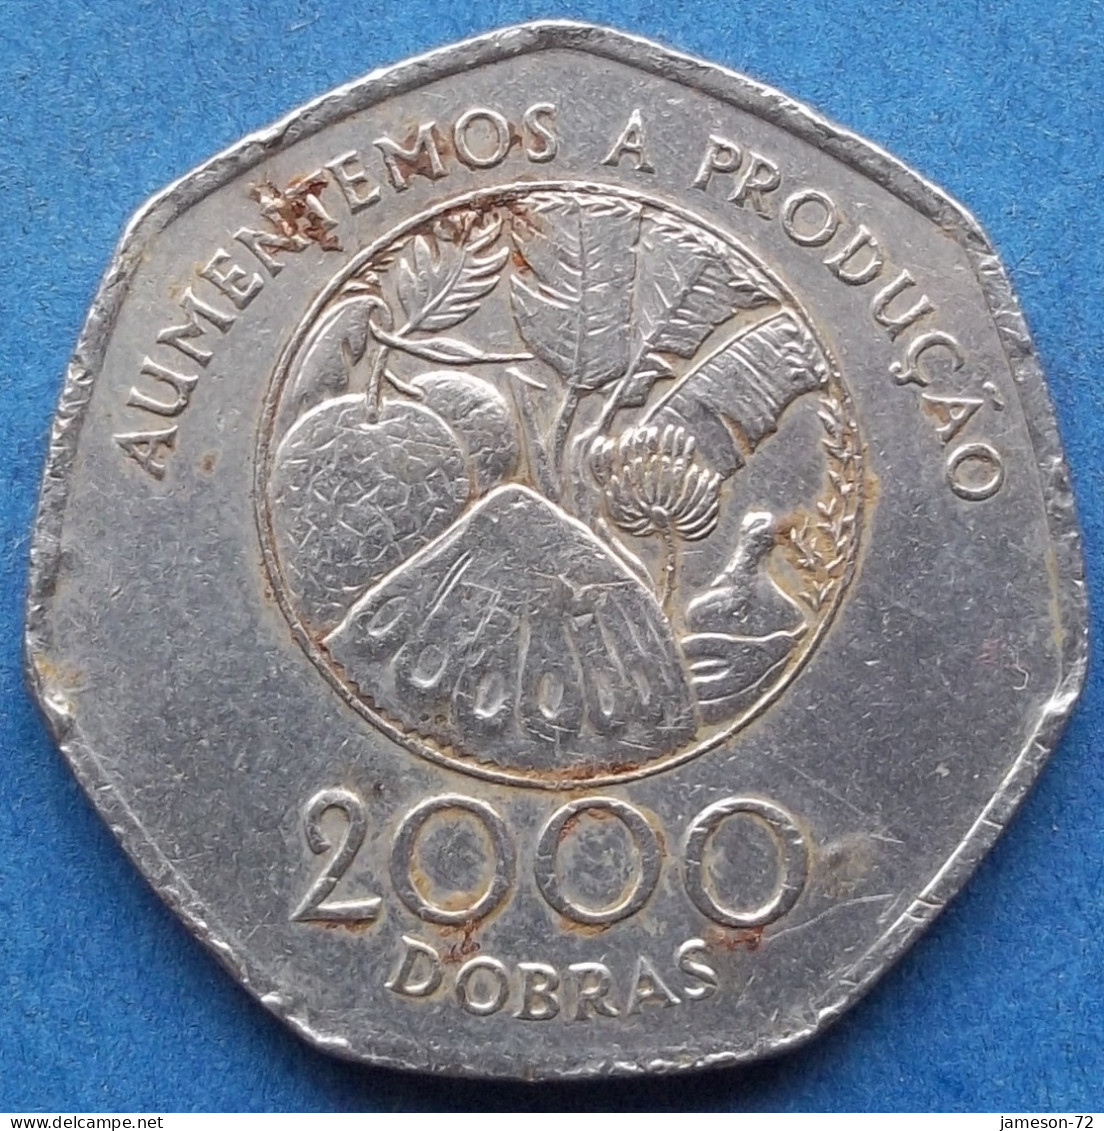 SAINT THOMAS & PRINCE ISLAND - 2000 Dobras 1997 "Tropical Food Plants" KM#91 Democratic Rep. (1975) - Edelweiss Coins - Santo Tomé Y Príncipe